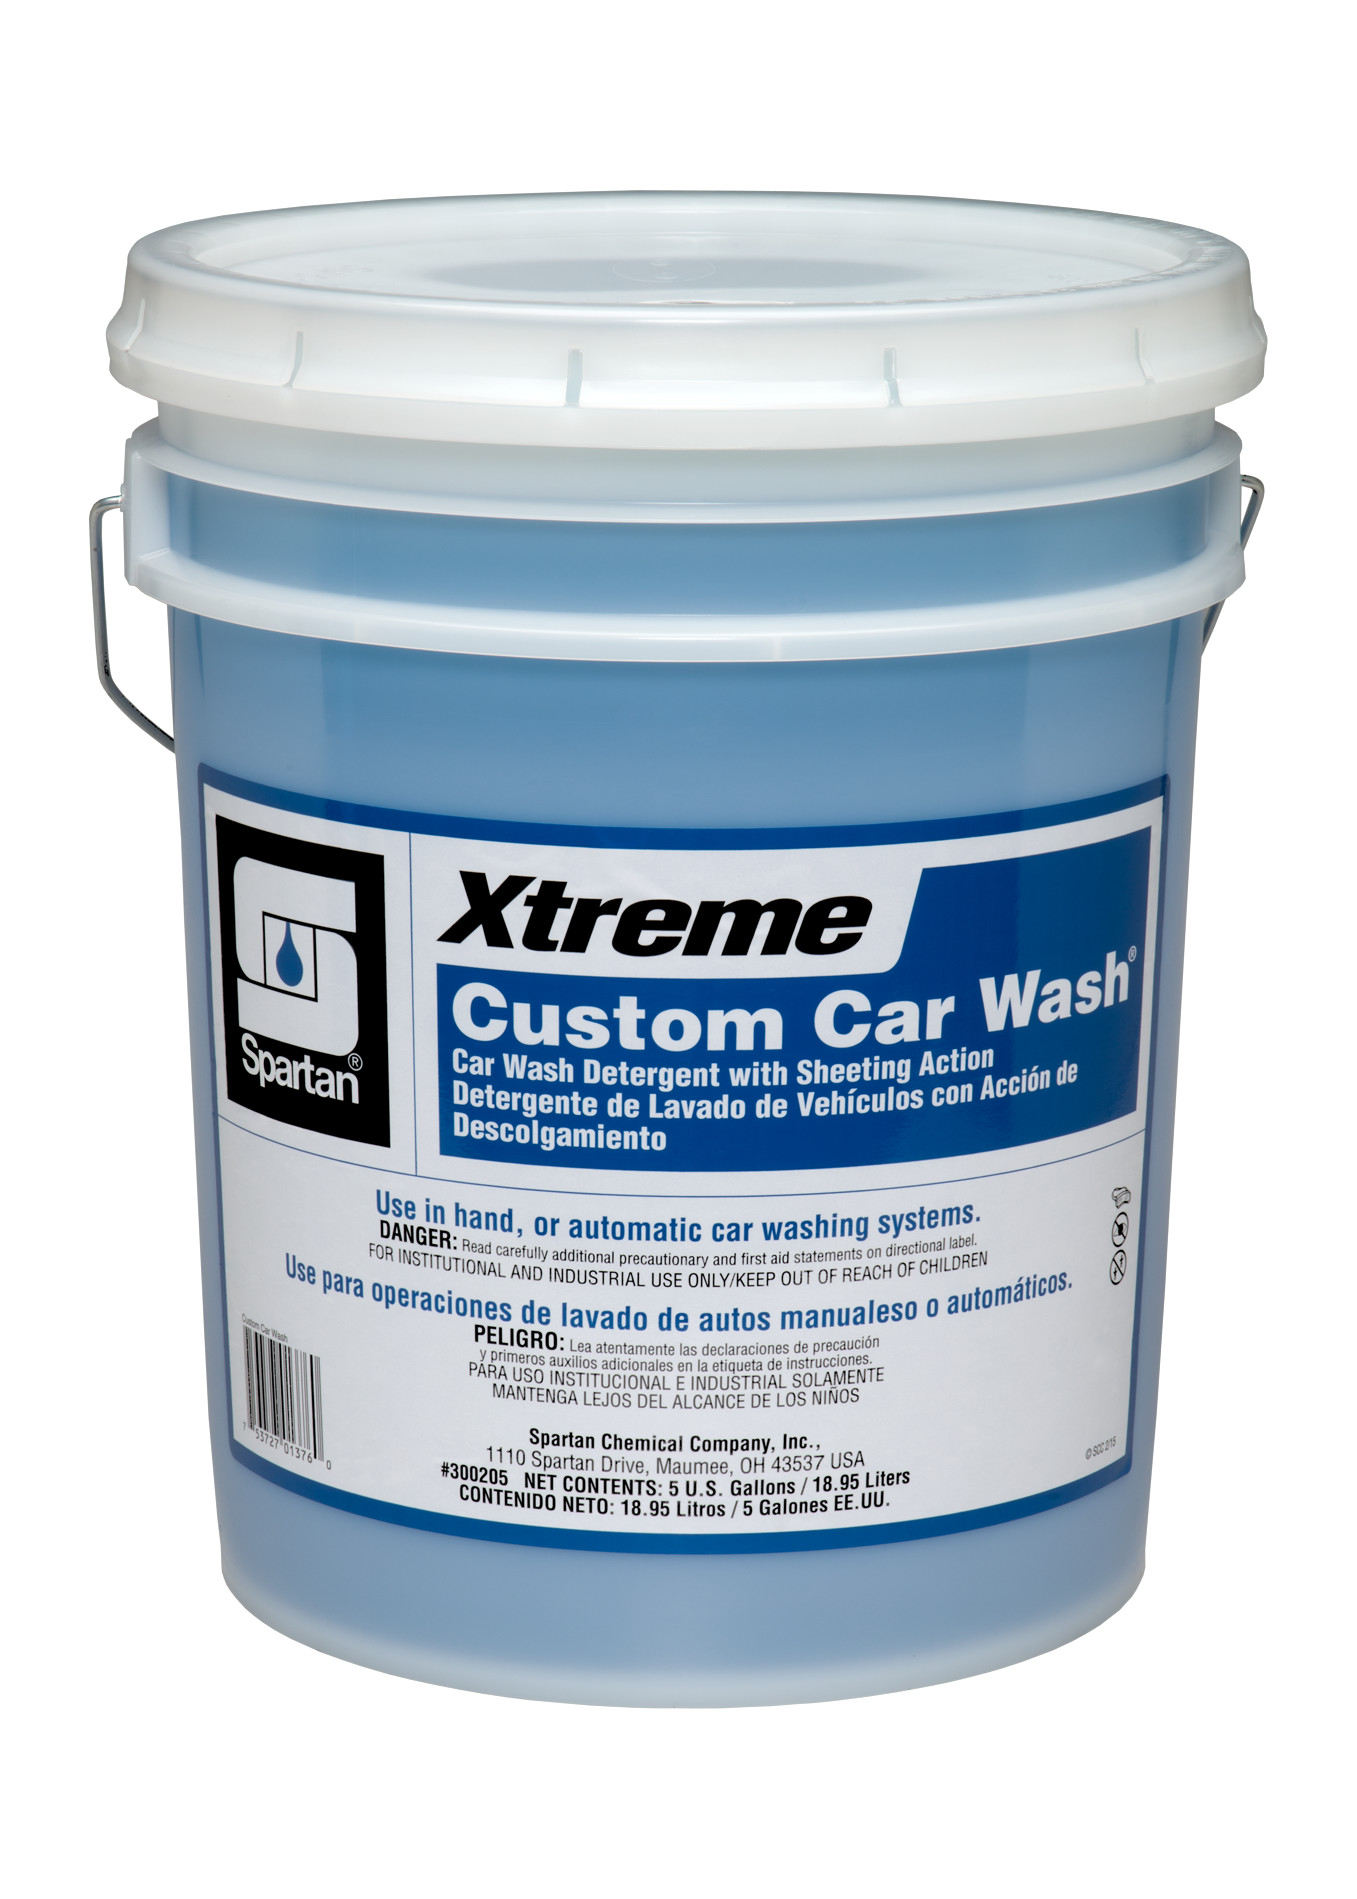 Spartan Chemical Company Xtreme Custom Car Wash, 5 GAL PAIL